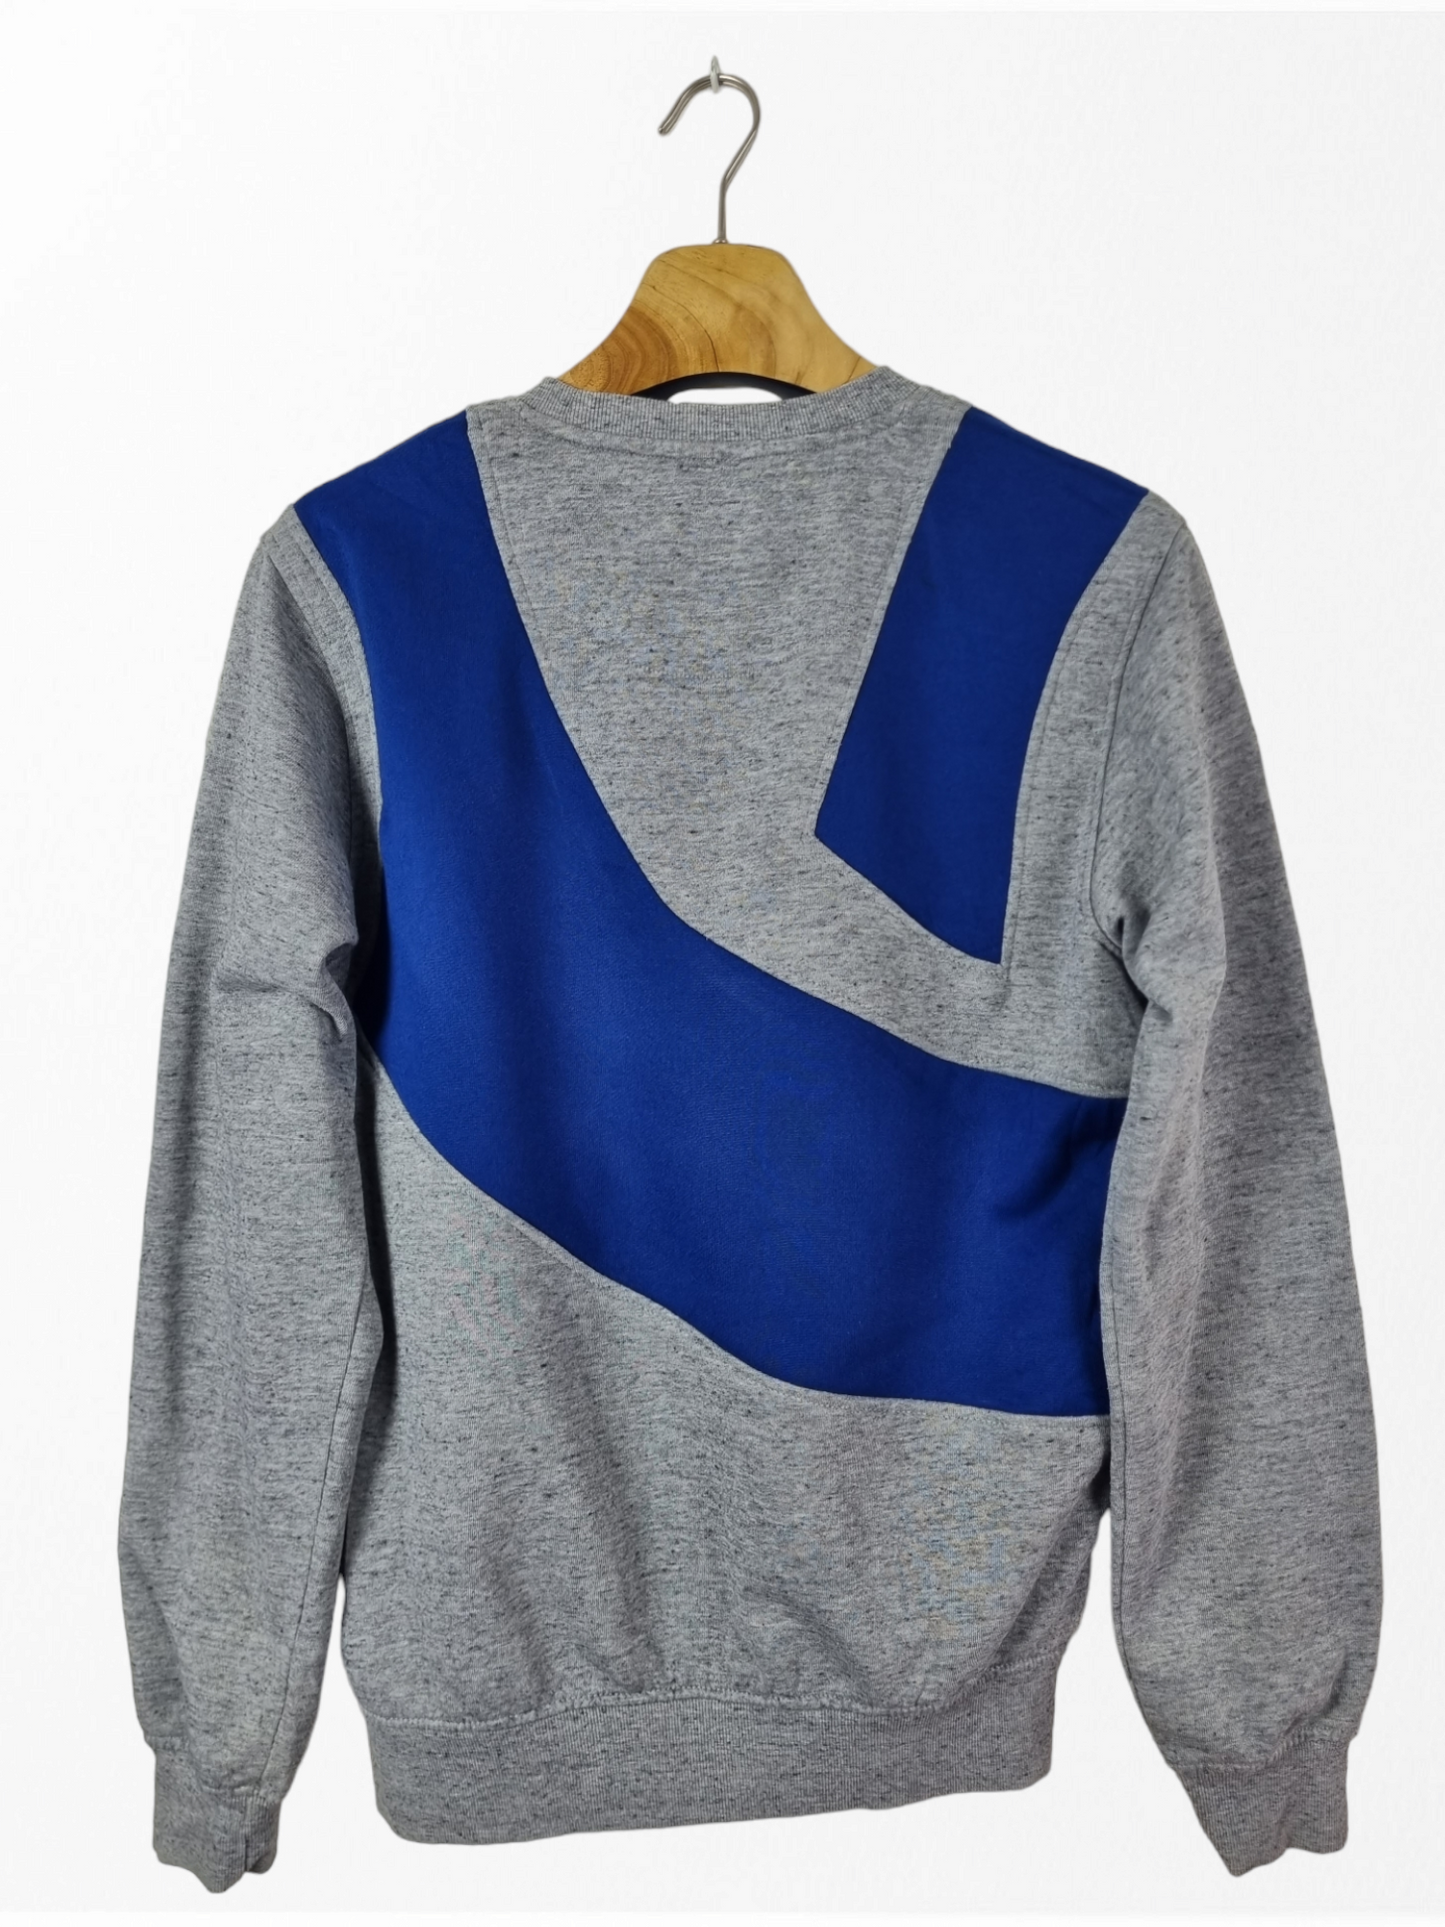 Adidas 80s chest logo sweater maat S/M